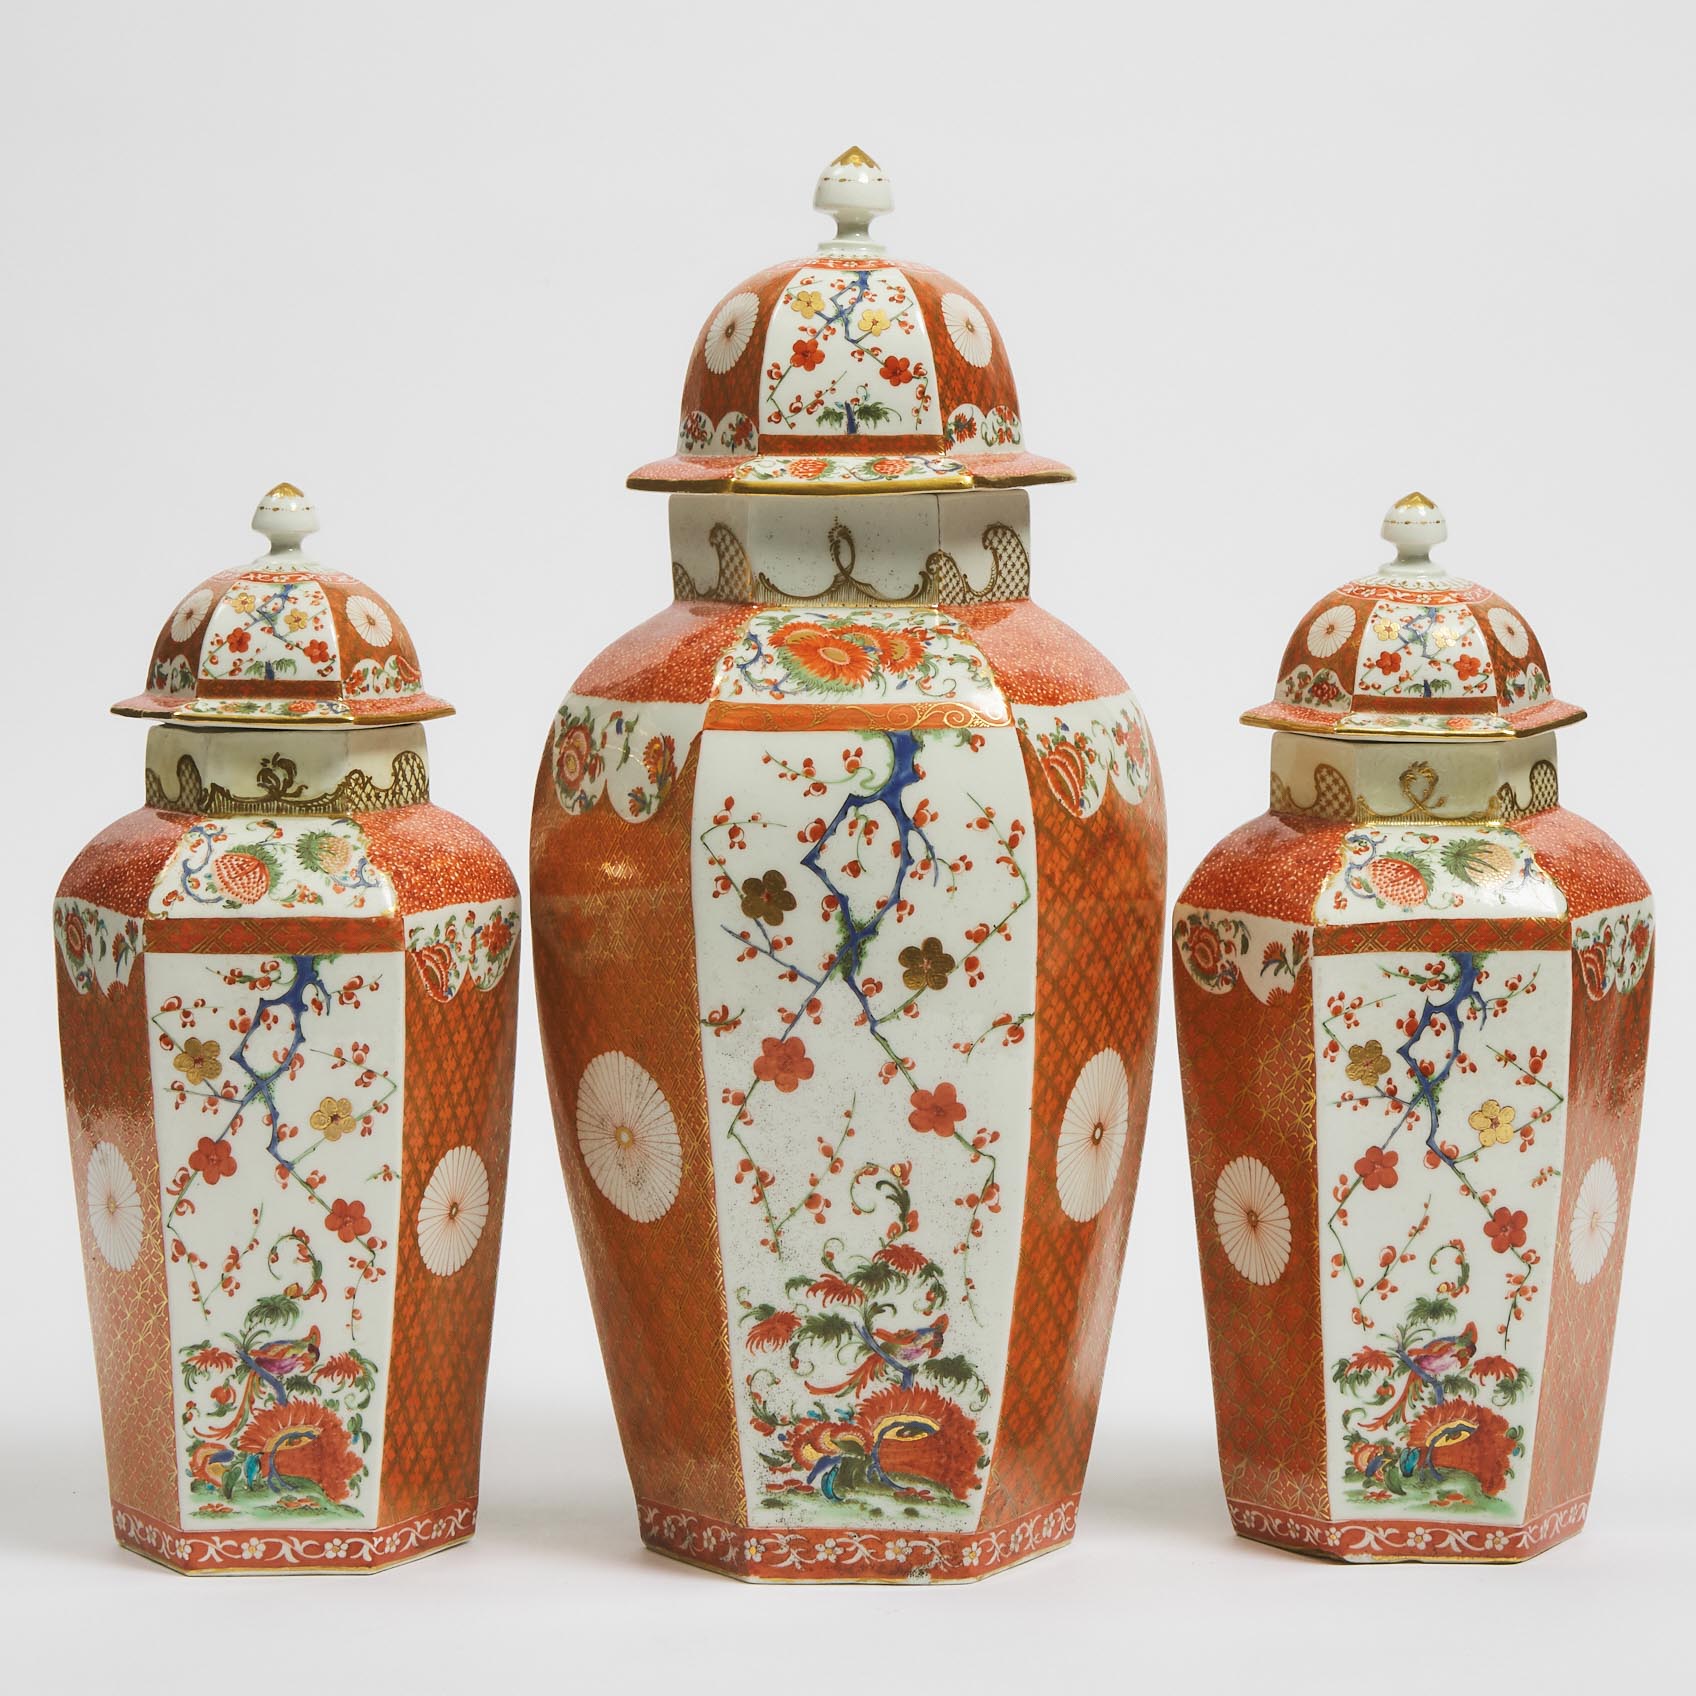 Garniture of Three Worcester Scarlet Japan Pattern Hexagonal Vases and Covers, c.1765-70